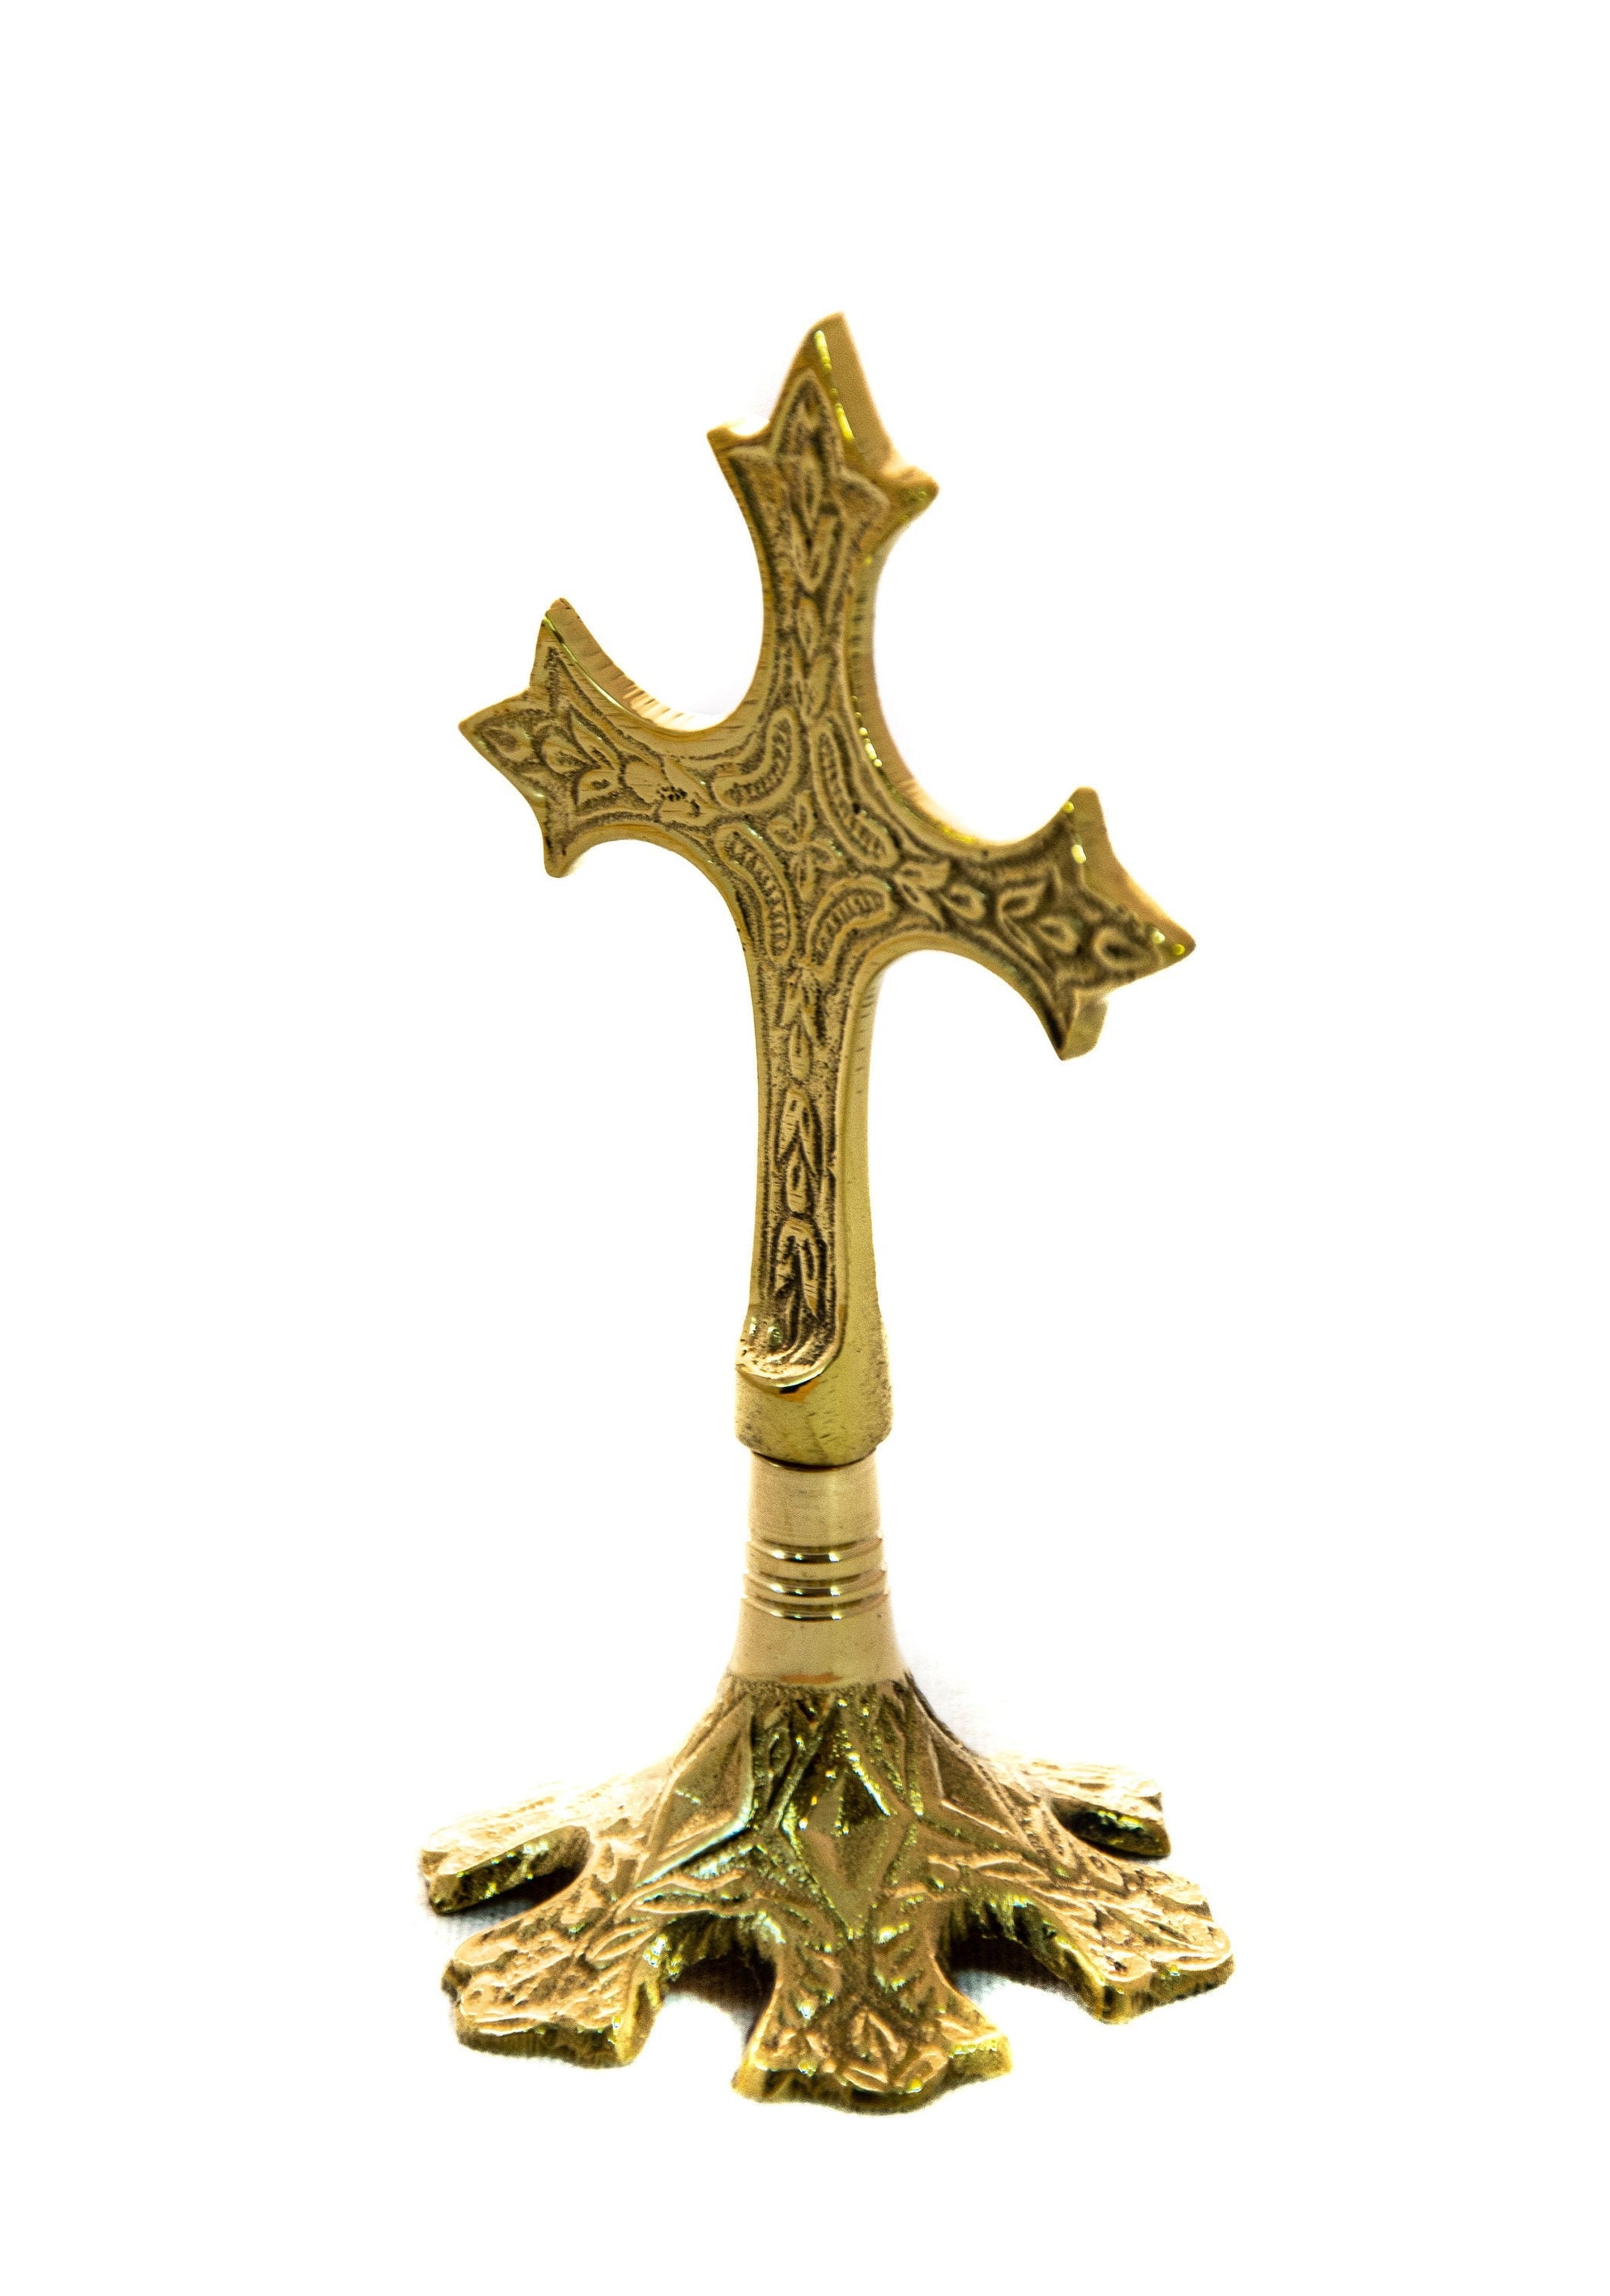 Standing Table Altar Crucifix, Jesus Christ Brass Blessing Cross, Handmade Greek Orthodox Byzantine Gold plated Holy Cross, religious decor TheHolyArt